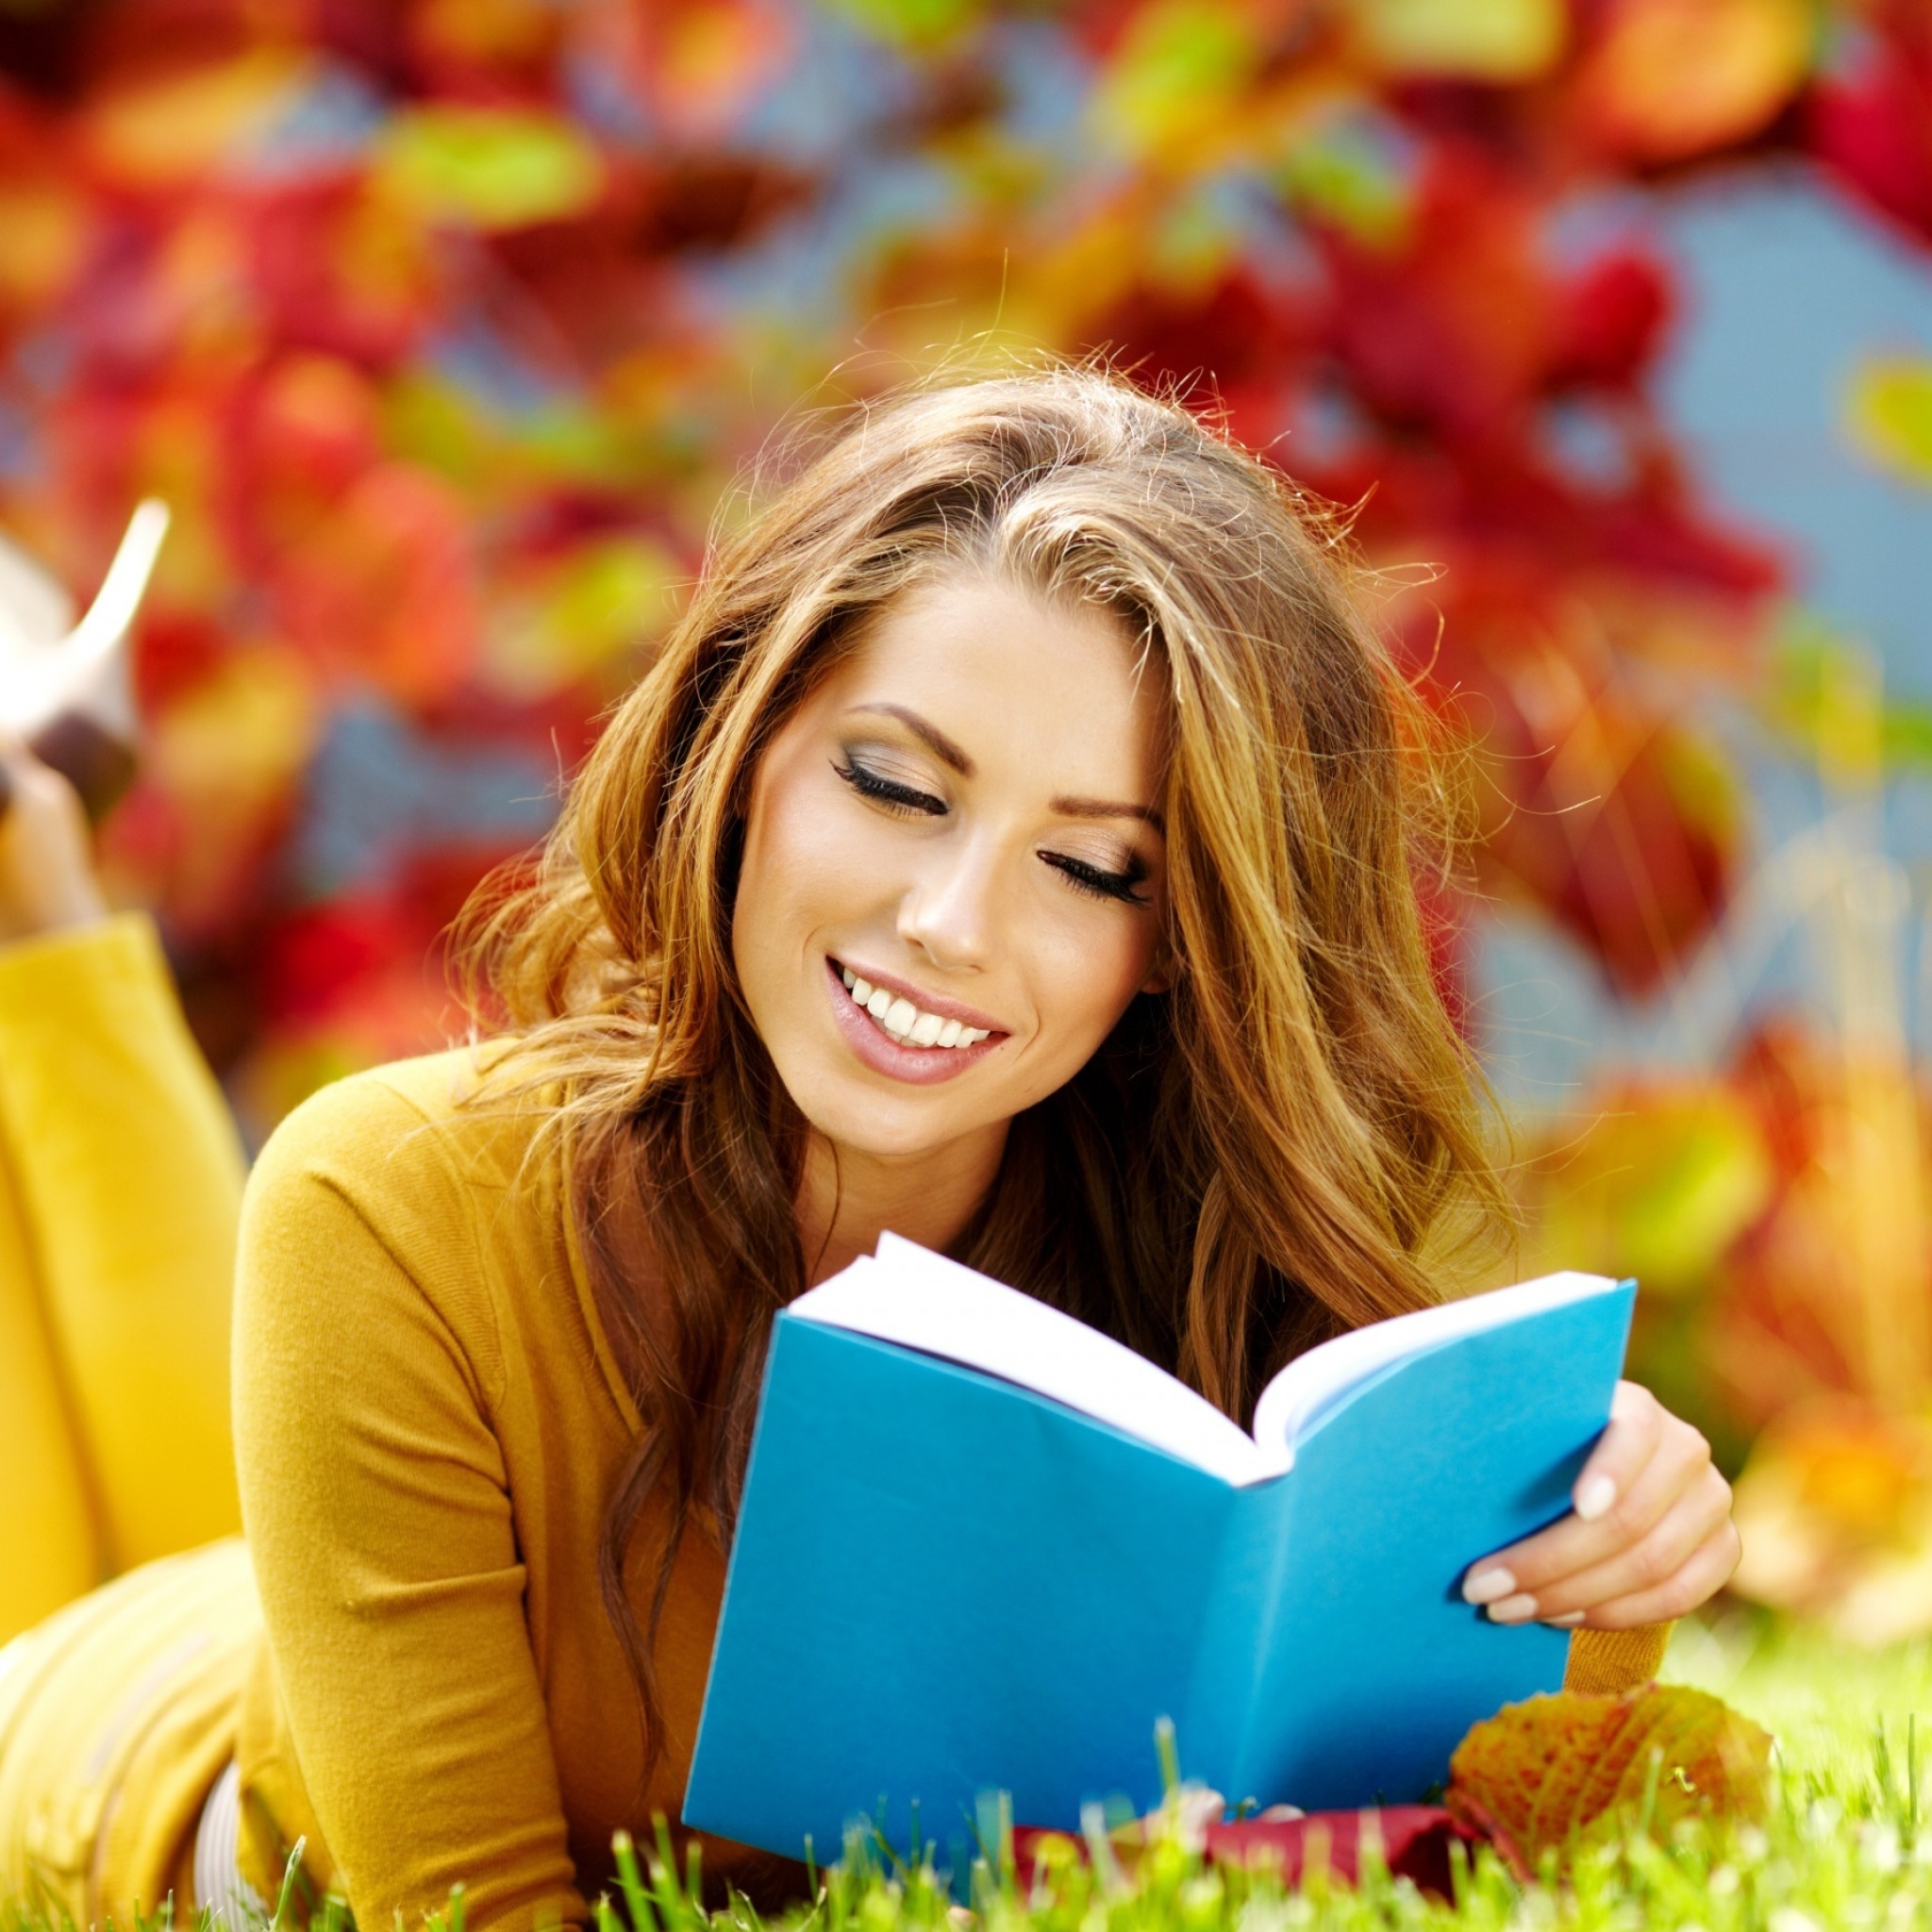 Girl Reading Book in Autumn Park wallpaper 2048x2048